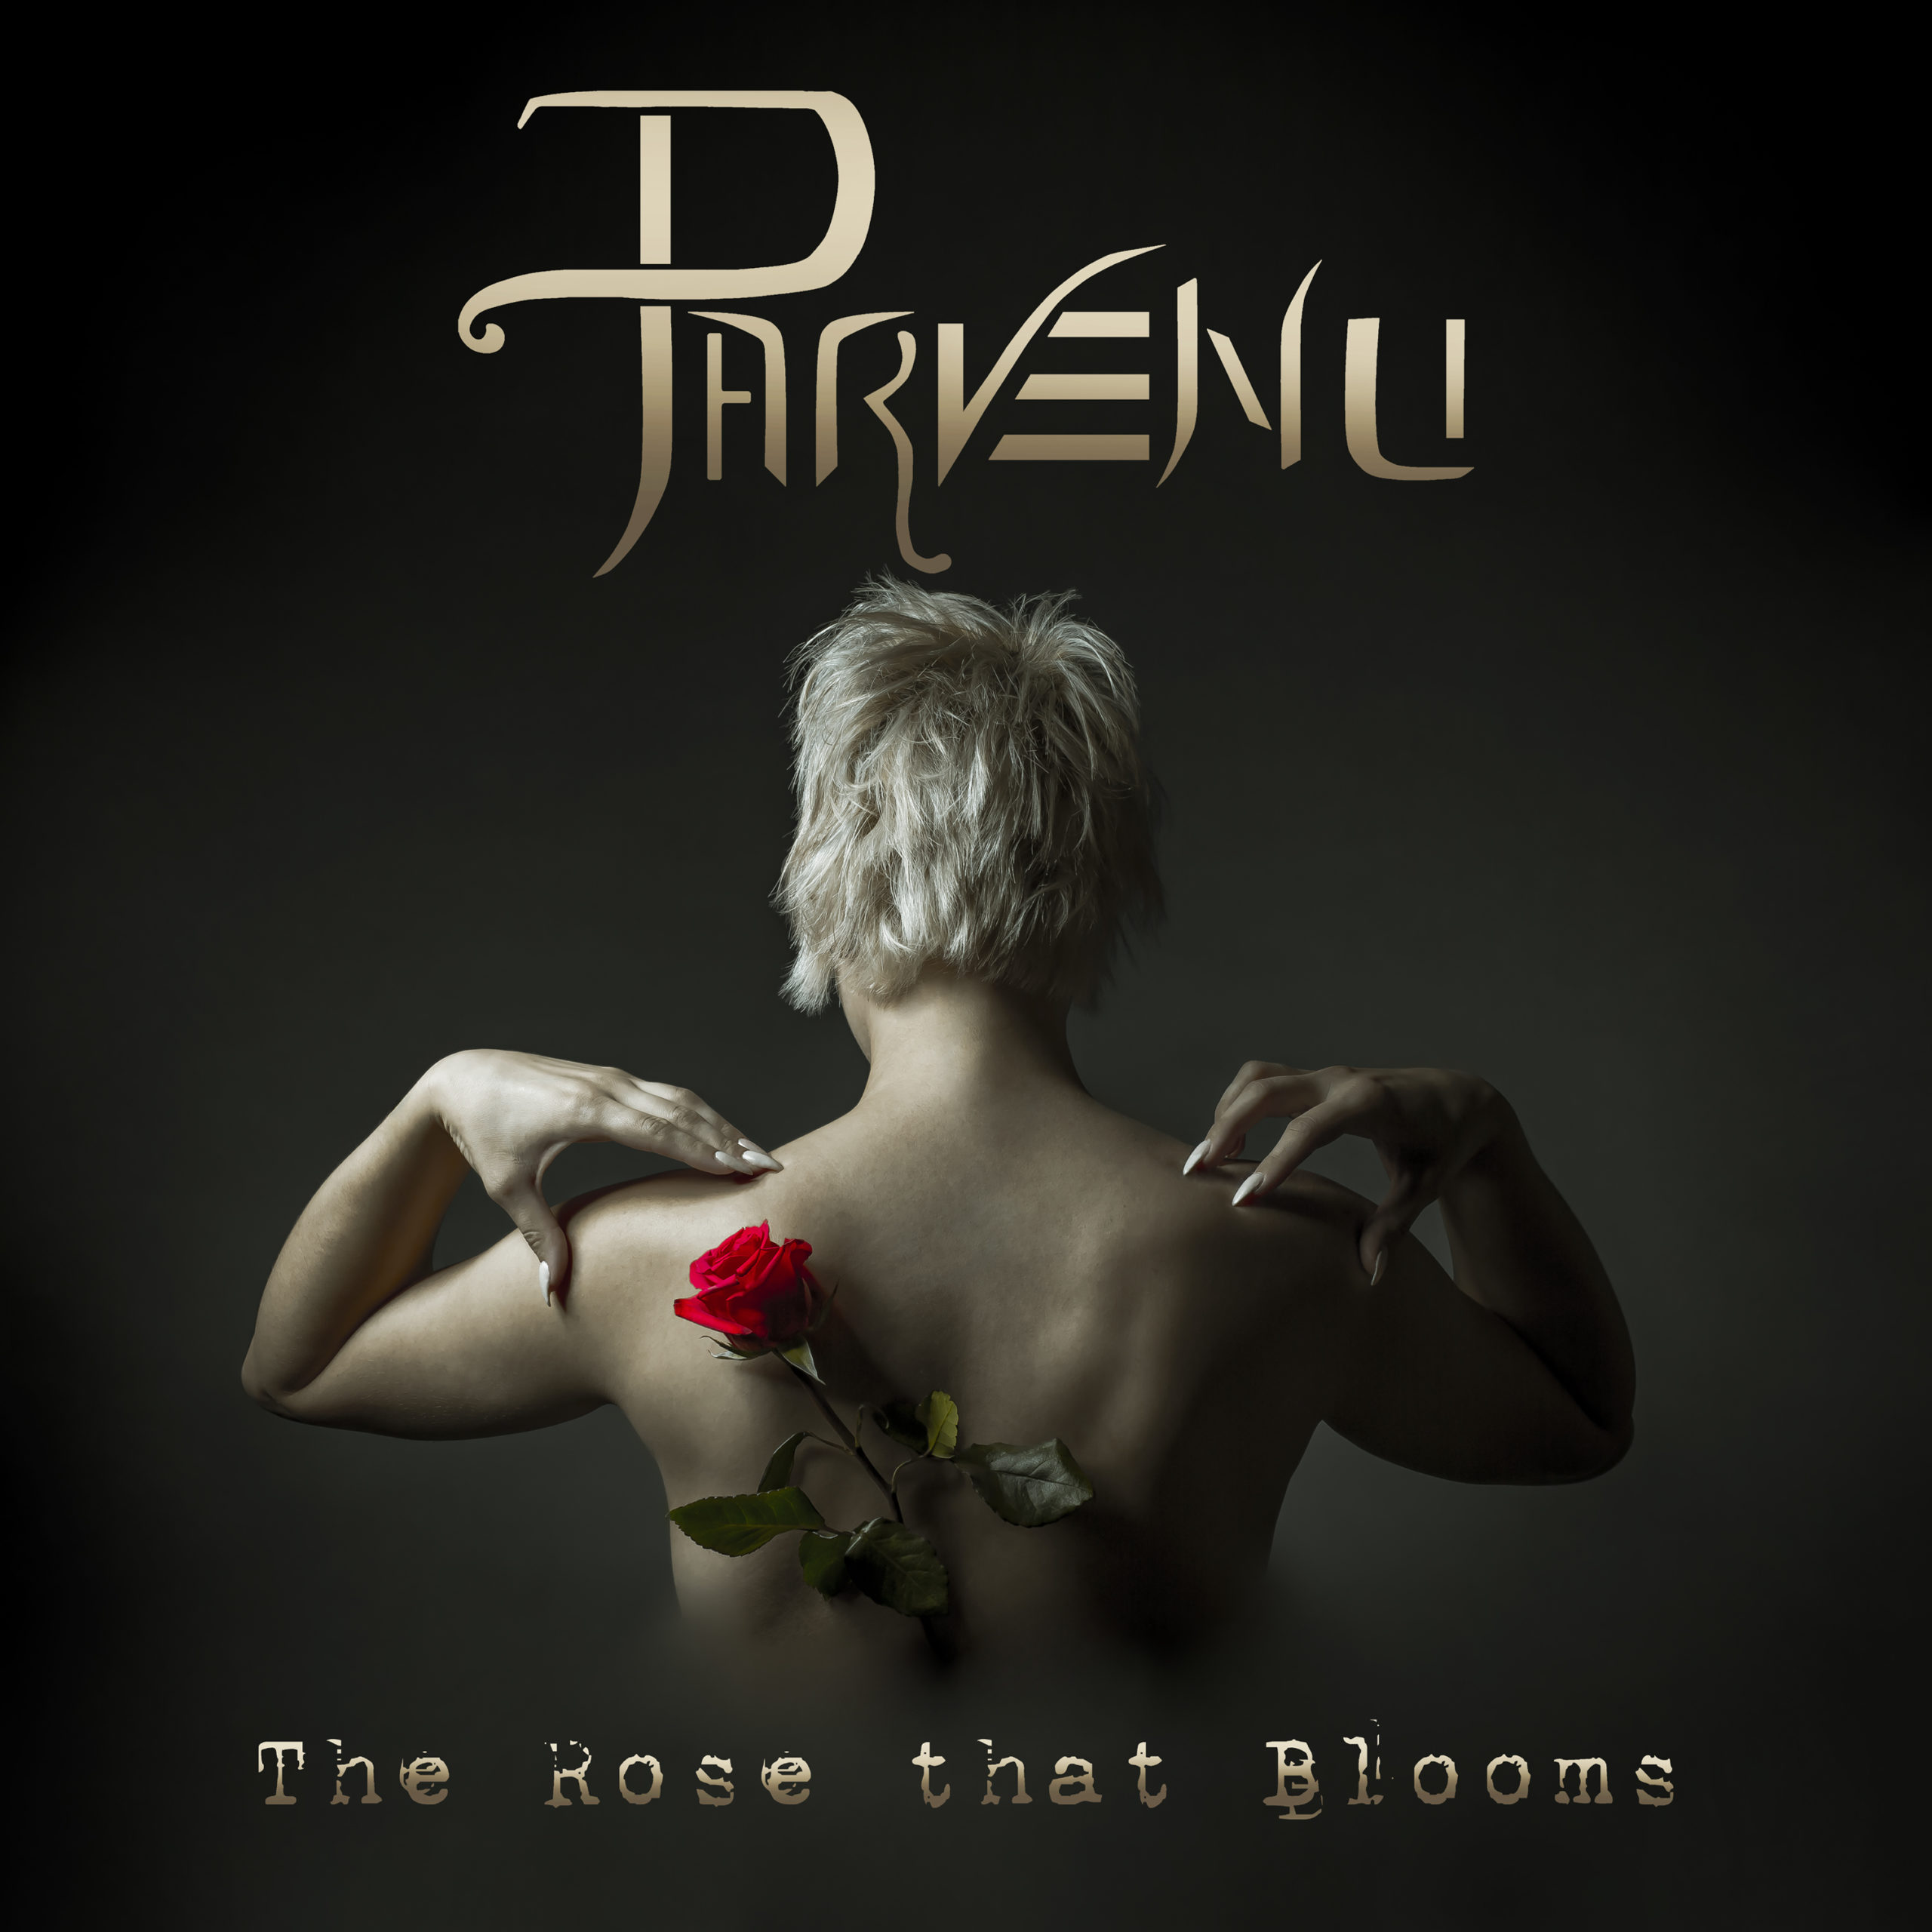 ALBUM REVIEW: Kansas City’s Parvenu evolves with second EP